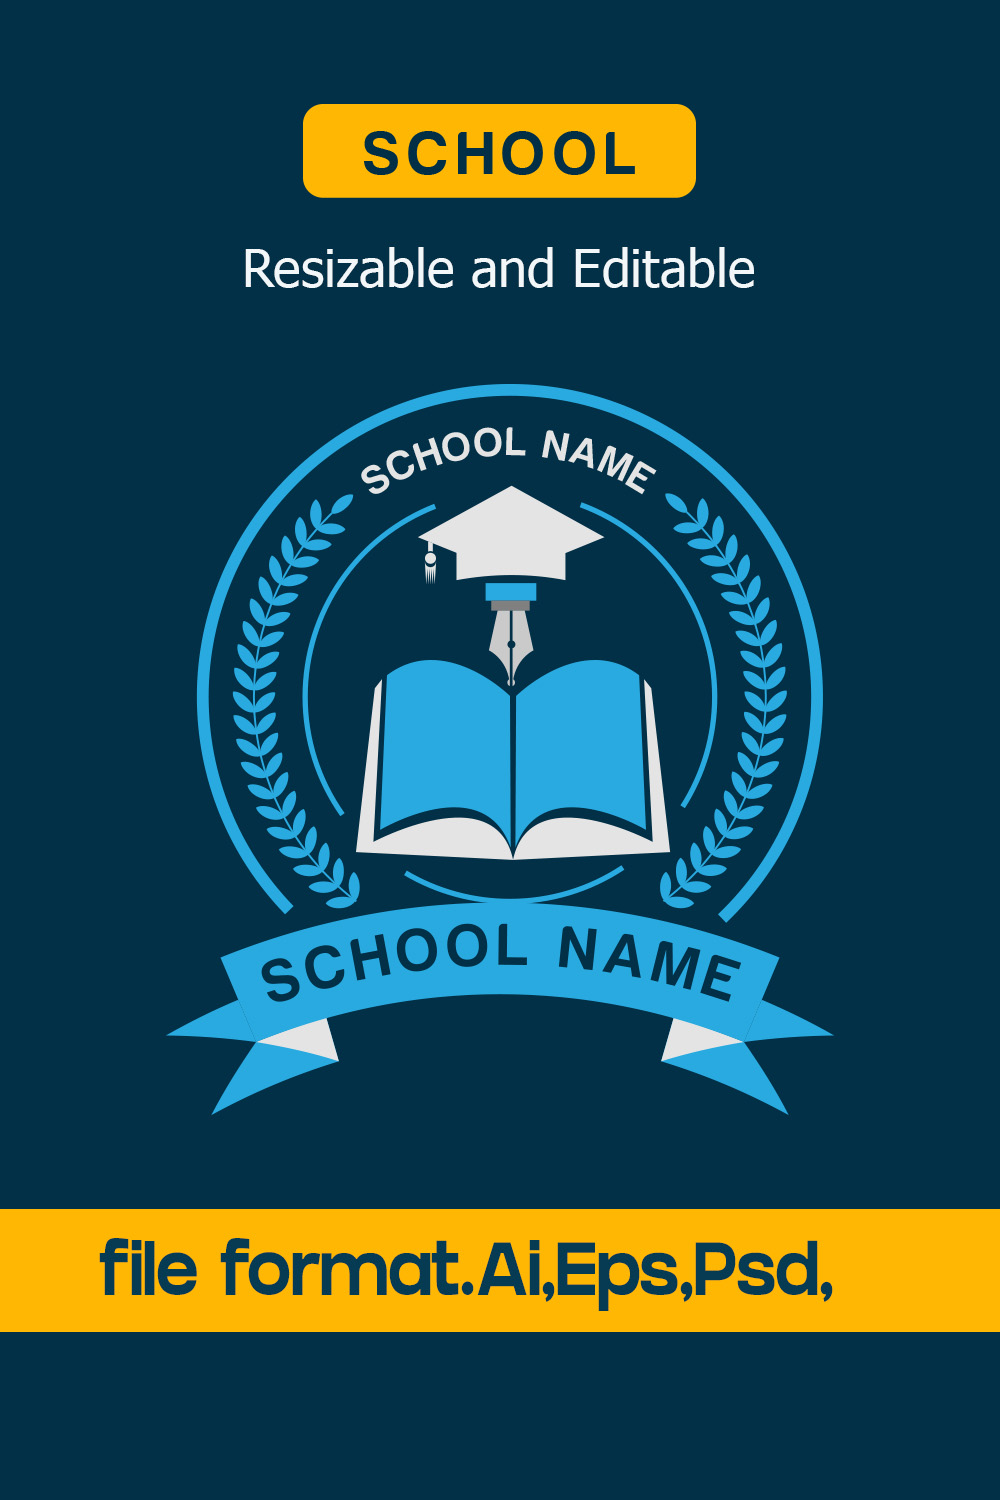 School Logo Template Resizable and Editable Pinterest image.